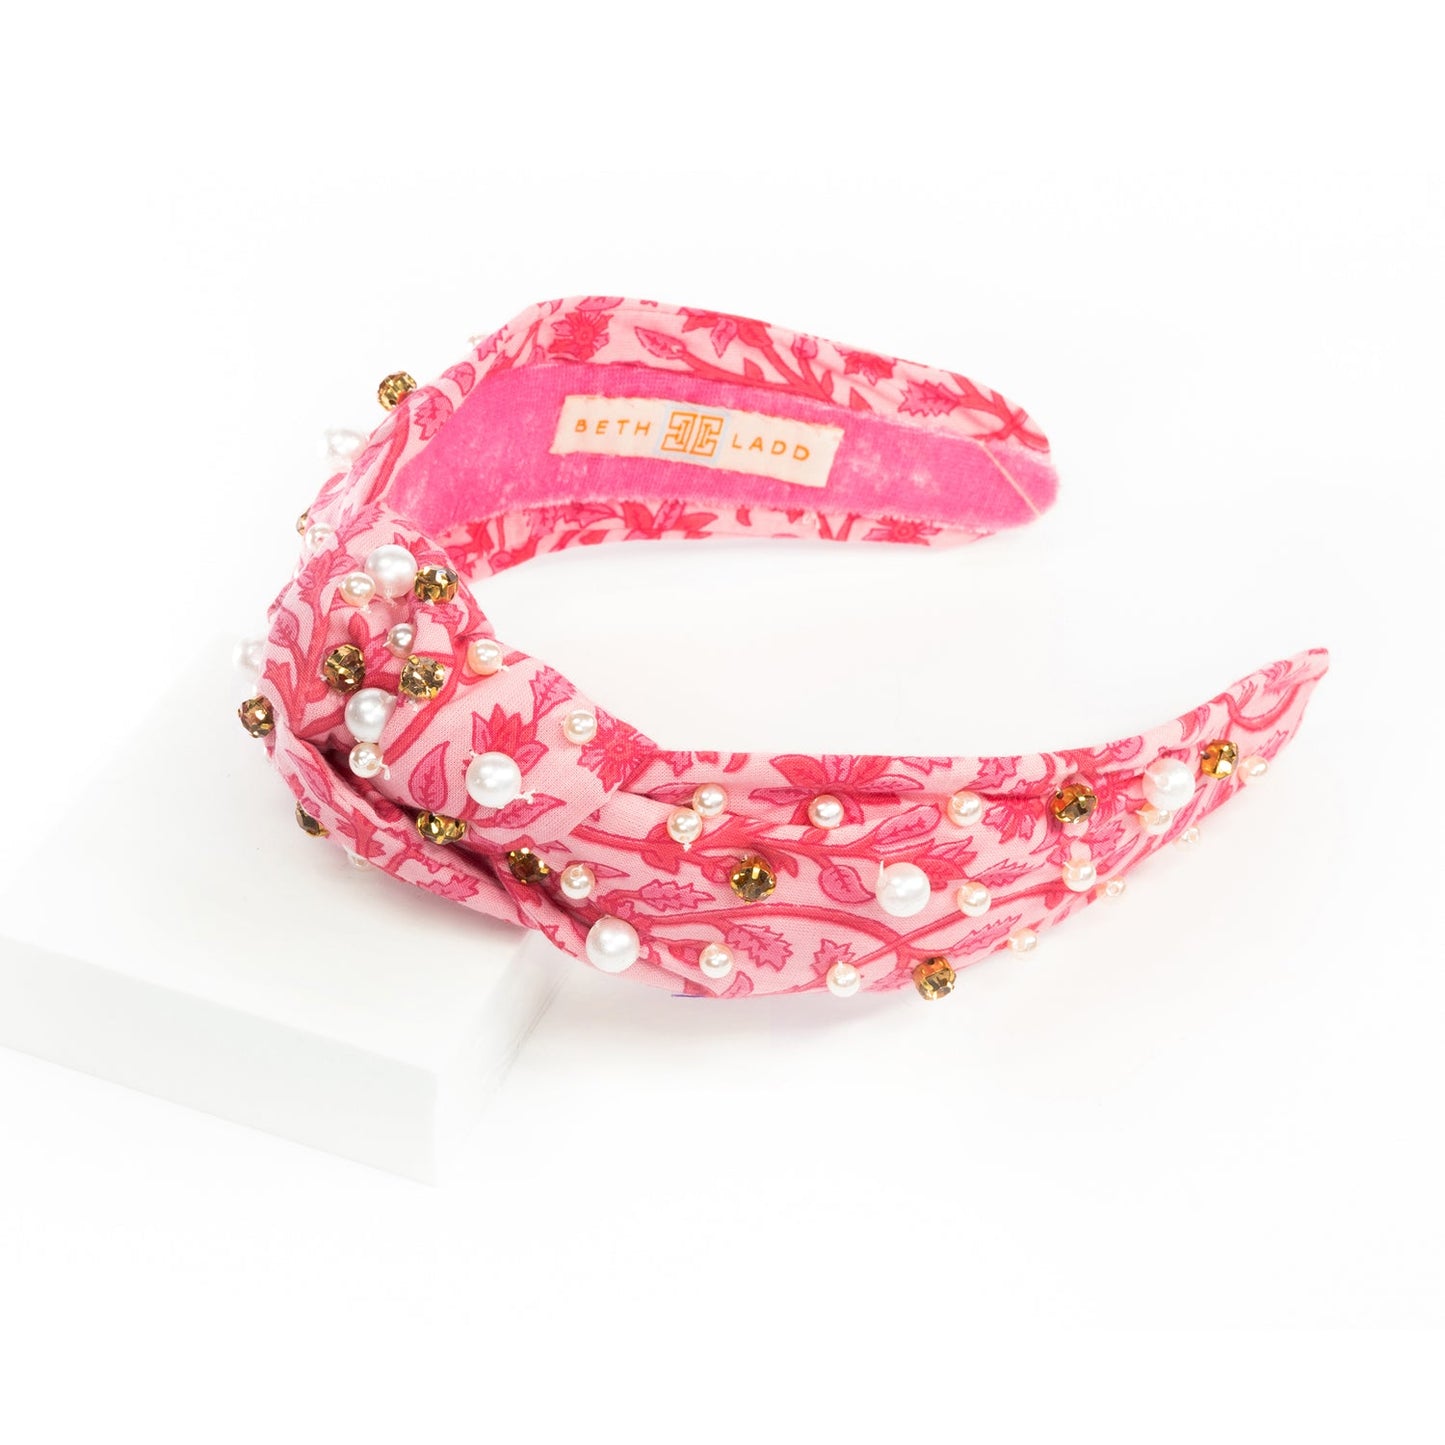 Beth Ladd Headband with Gems in Highland Park Pink